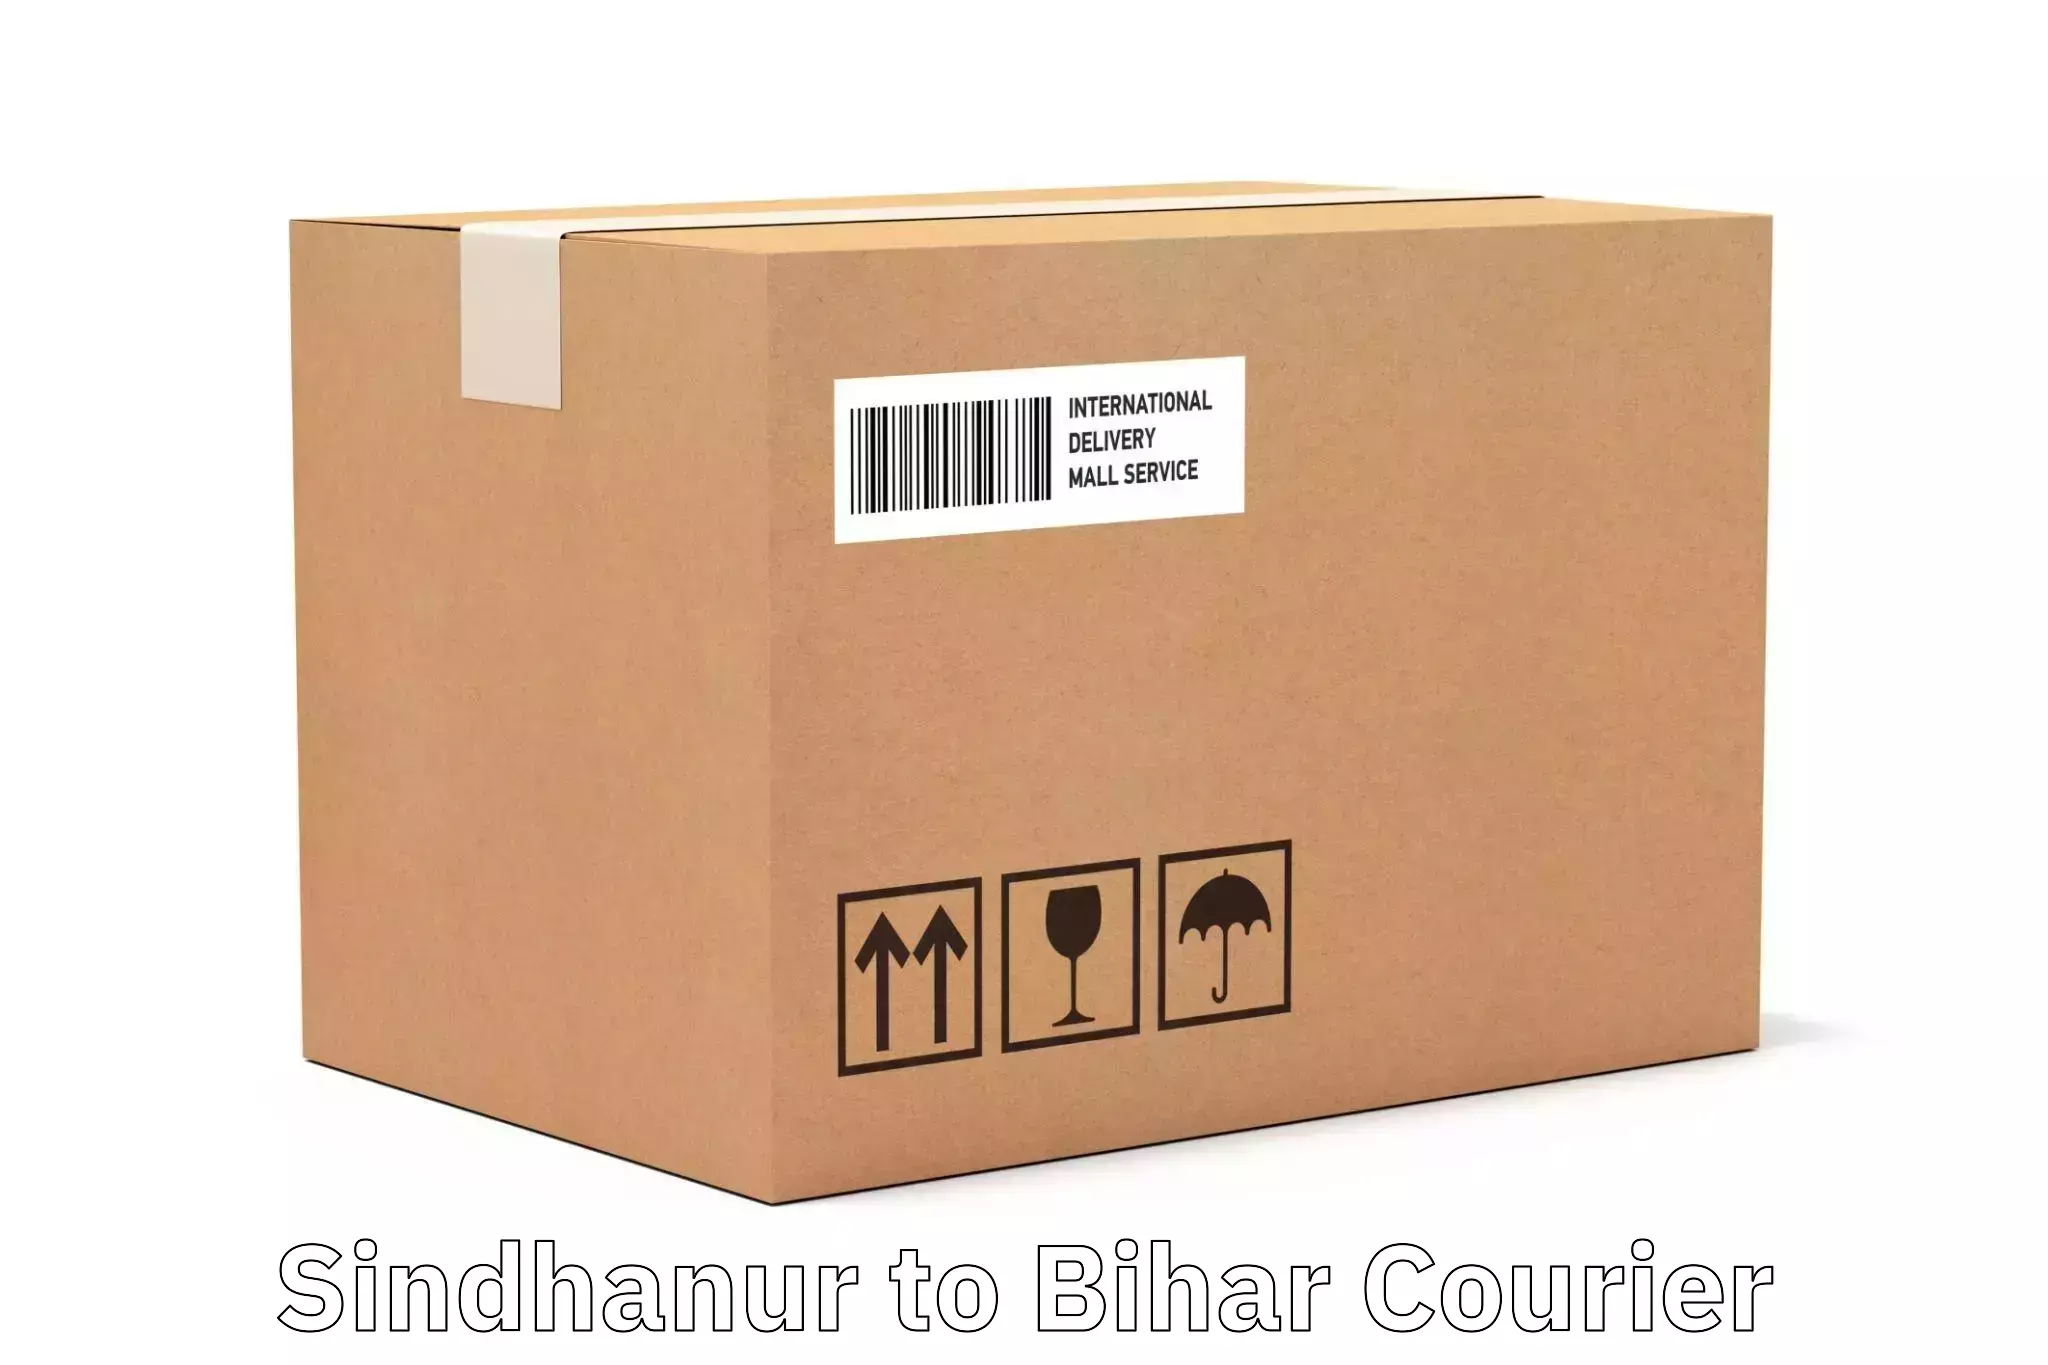 Logistics and distribution Sindhanur to Bihar